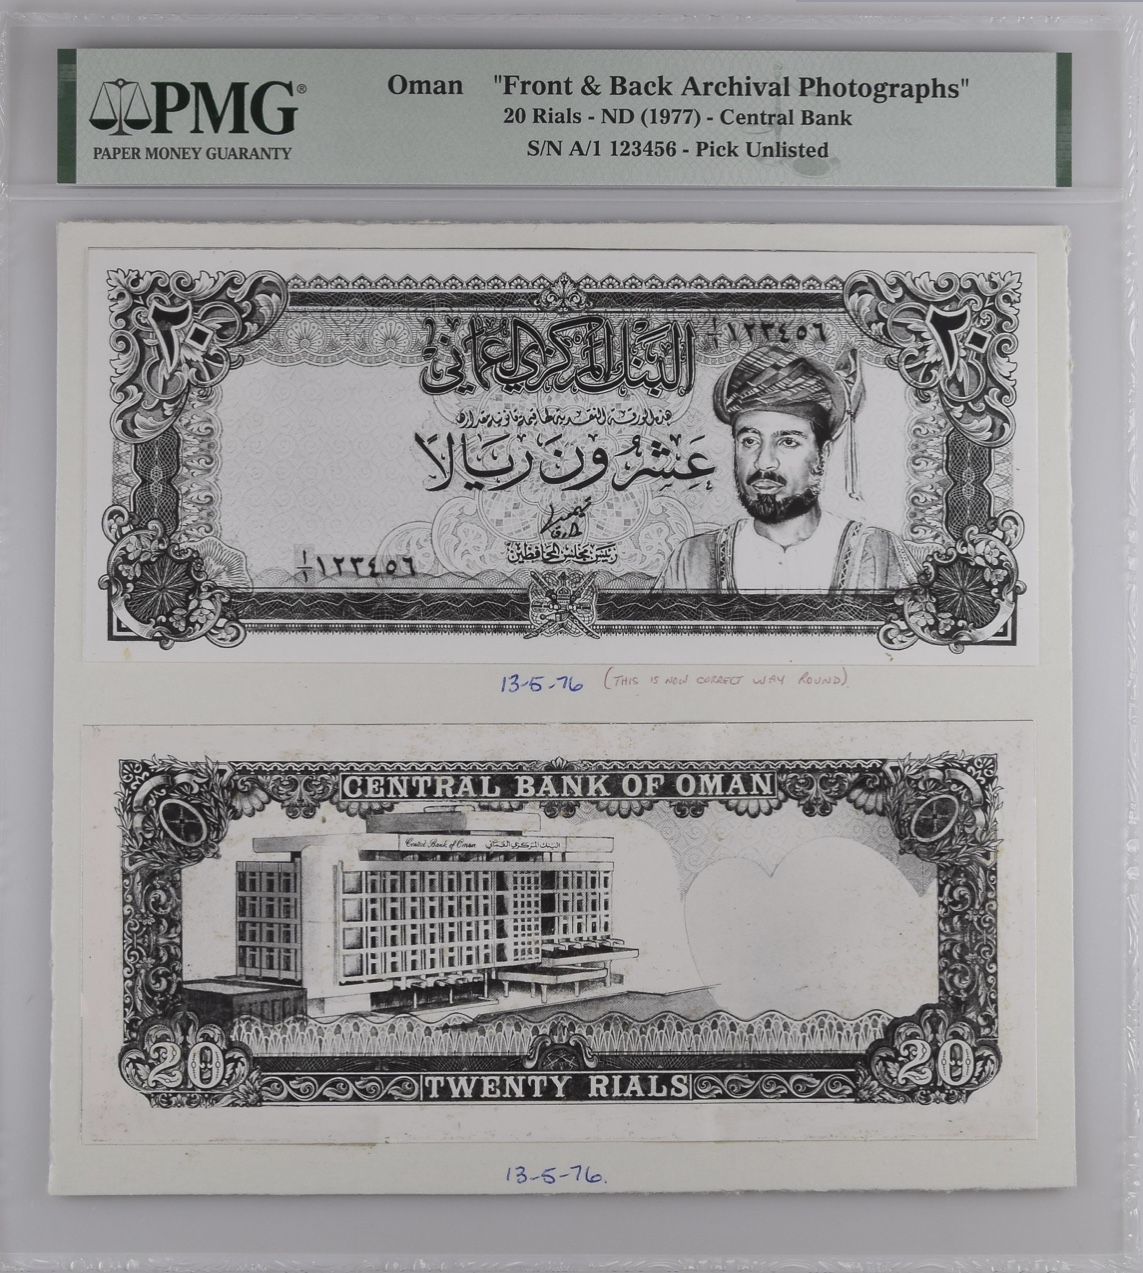 1976 Oman 20 Rials Archival Photographs Black & White Sultan Qaboos Unique & Ultra Rare One of its Kind